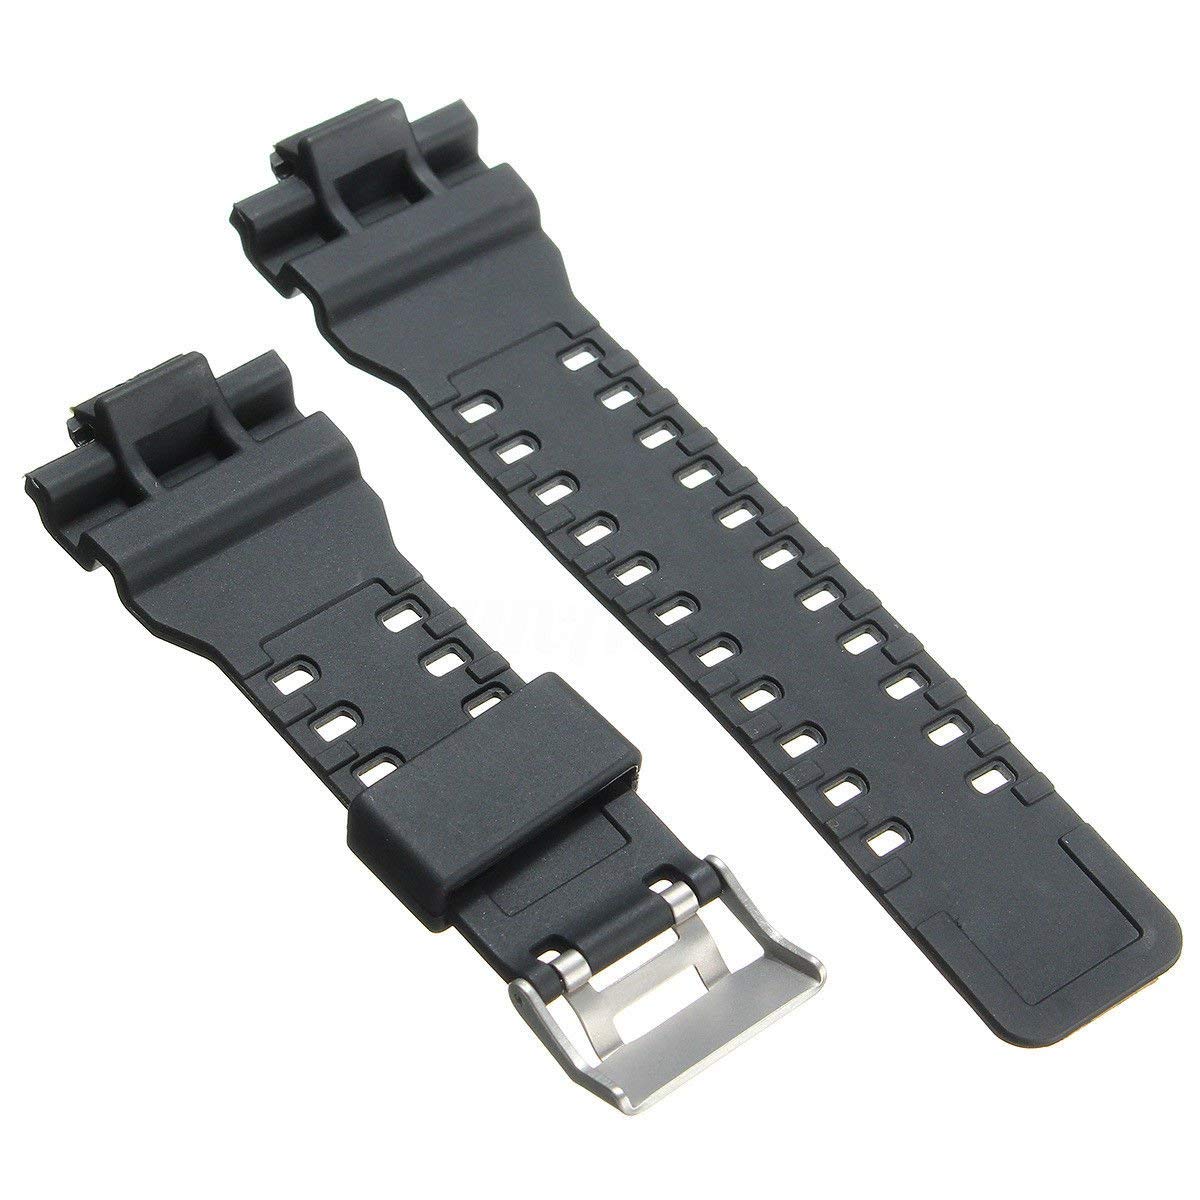 16mm Replacement Watch Band Strap fits G-Shock GA120 GA100 GA-100 G8900 GA300 GD120 GA-100 GA-110 GA-100 Resin Rubber